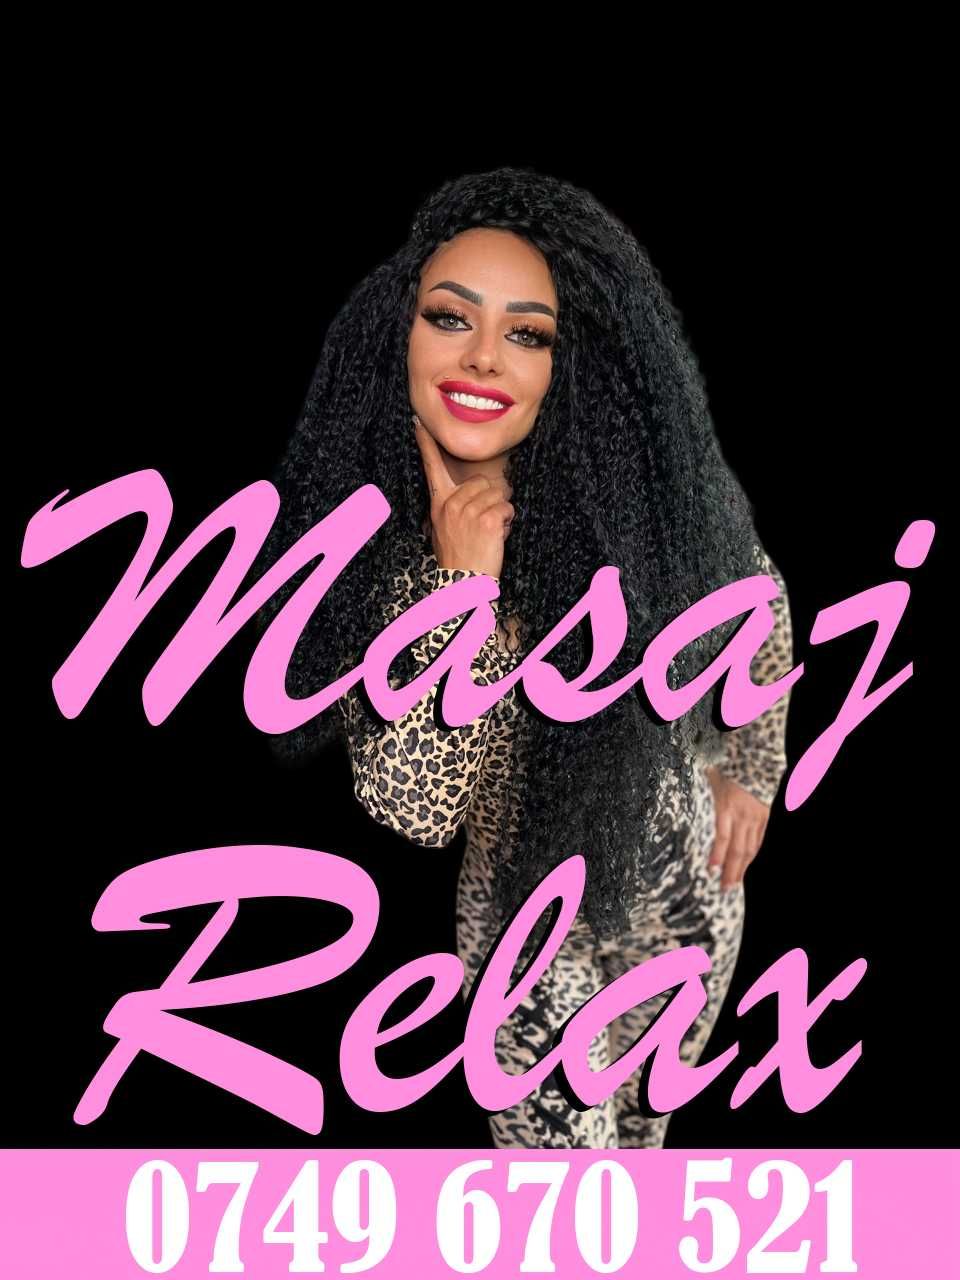 Masaj de Relaxare & Terapeutic - Masaj Profesional